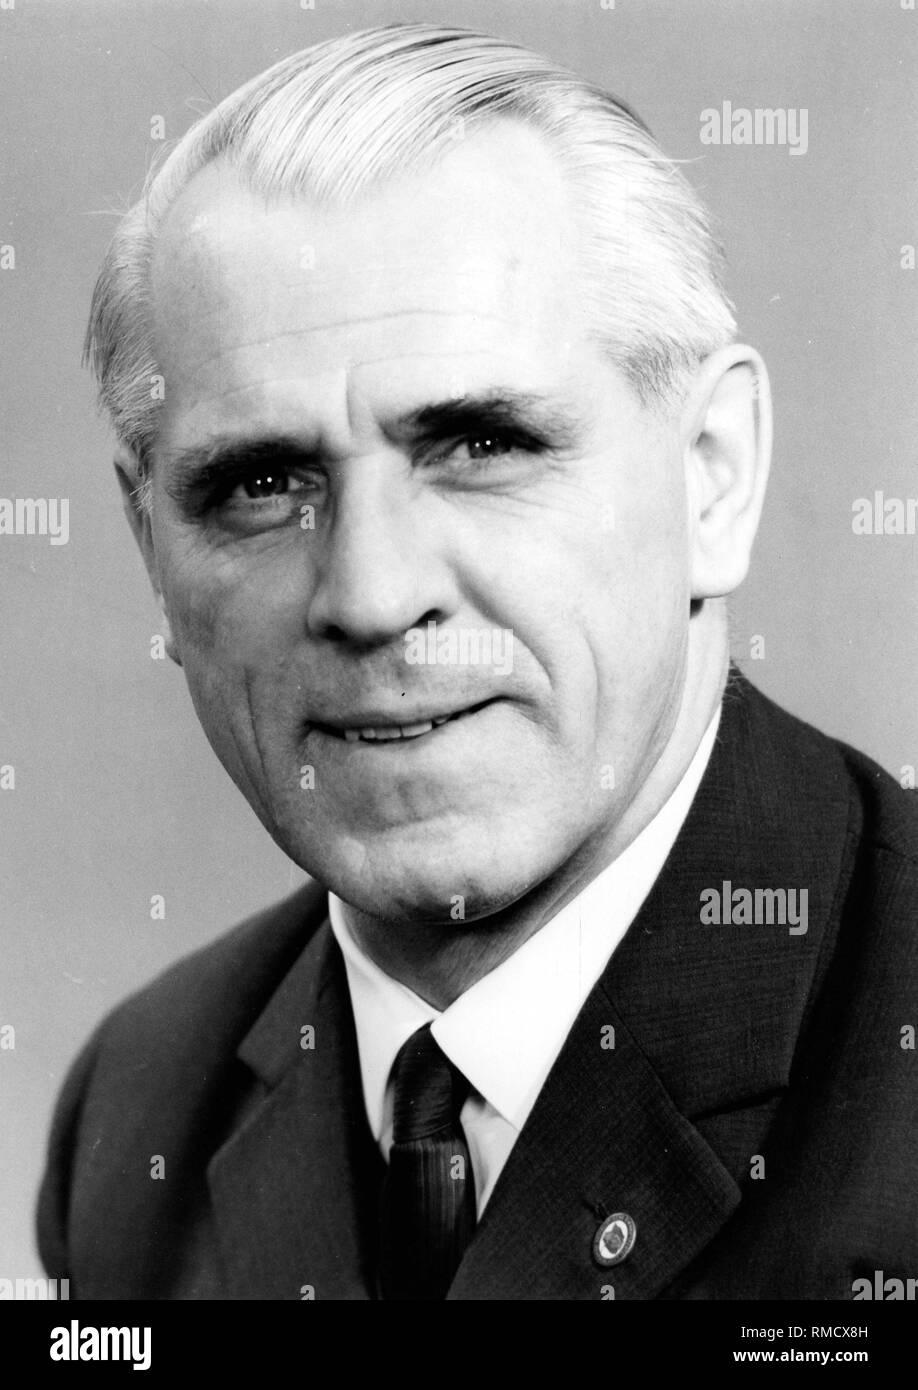 Willi Stoph, (09.07.1914 - 13.04.1999), entre 1953 - 1989 Membre du Bureau politique du SED, entre 1956 - 1960 Ministre de la défense de la RDA, entre 1964 - 1973 Premier Ministre de la RDA, entre 1973 - 1976 Président du Conseil d'état de la RDA, entre 1976 - 1989 Premier Ministre de la RDA. Banque D'Images